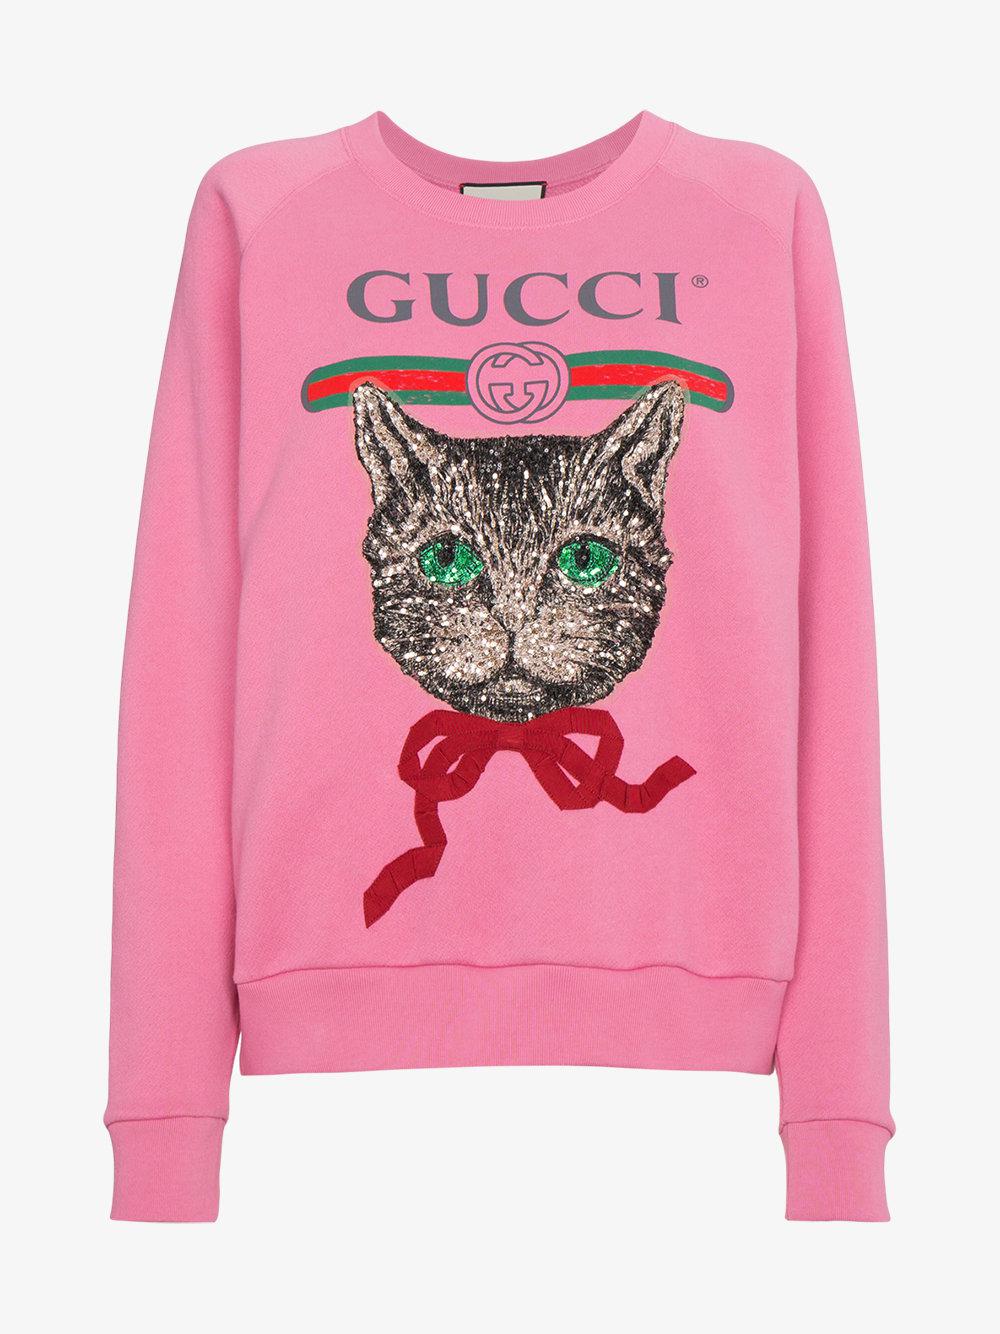 gucci sweatshirt with cat